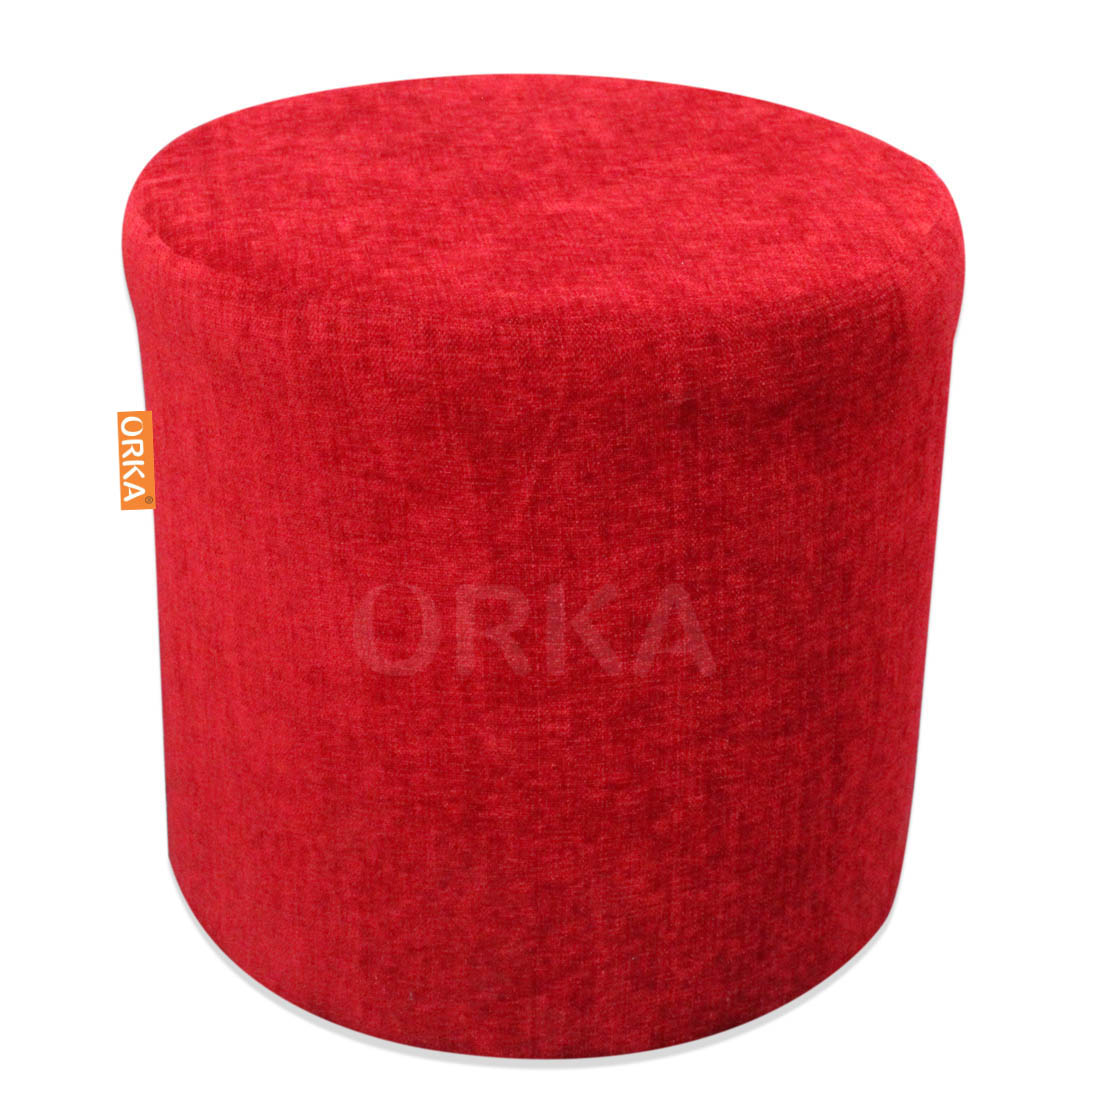 ORKA Ottoman Molfino Cylindrical Red